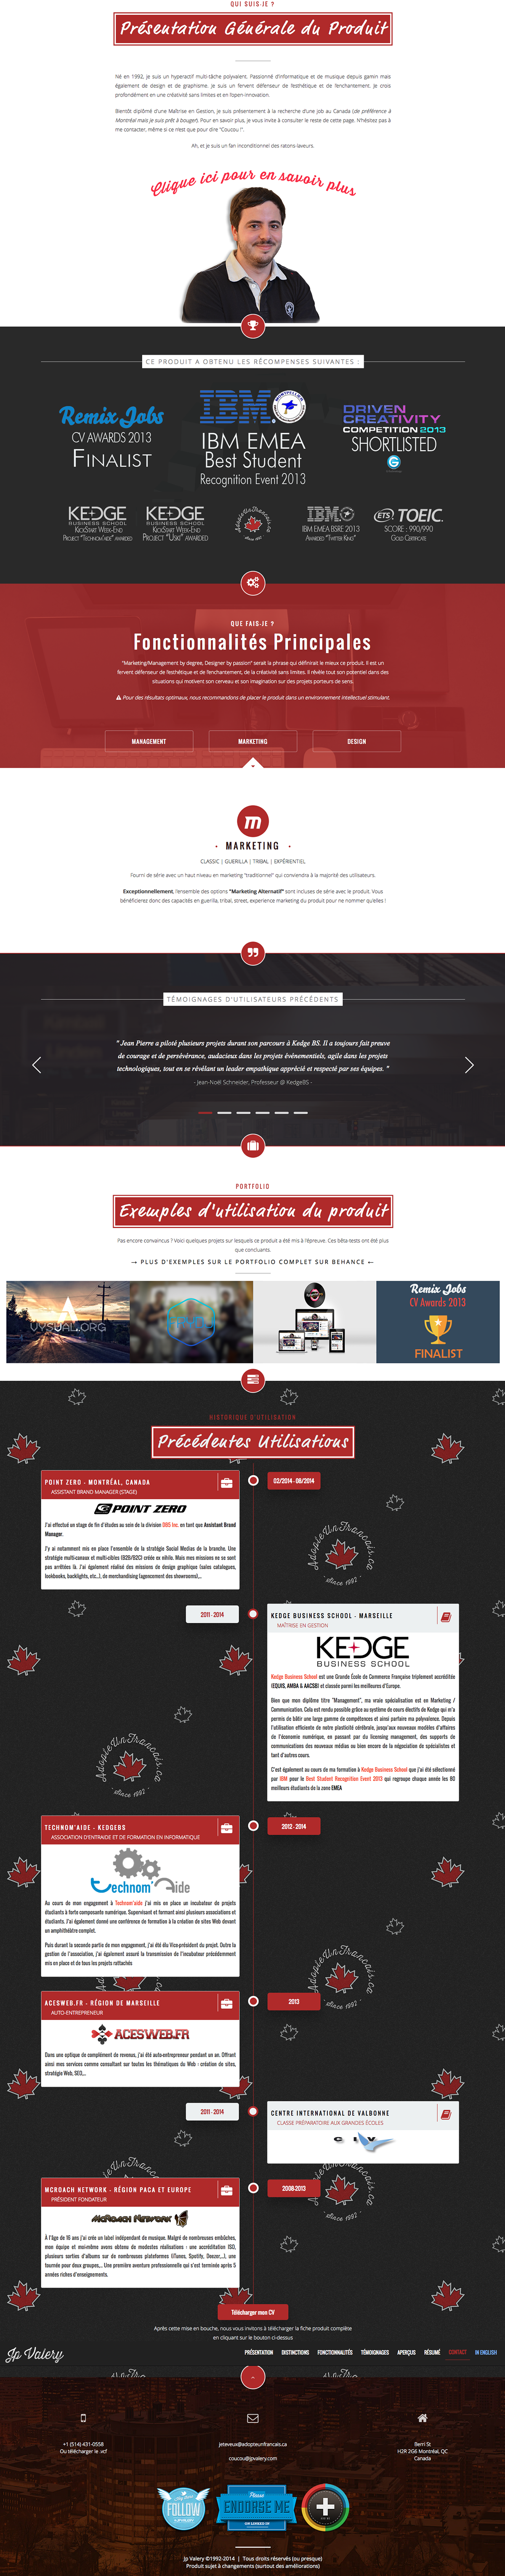 adopteunfrancais adopte un Français Montreal marketing   design communication Resume online landing page personal branding